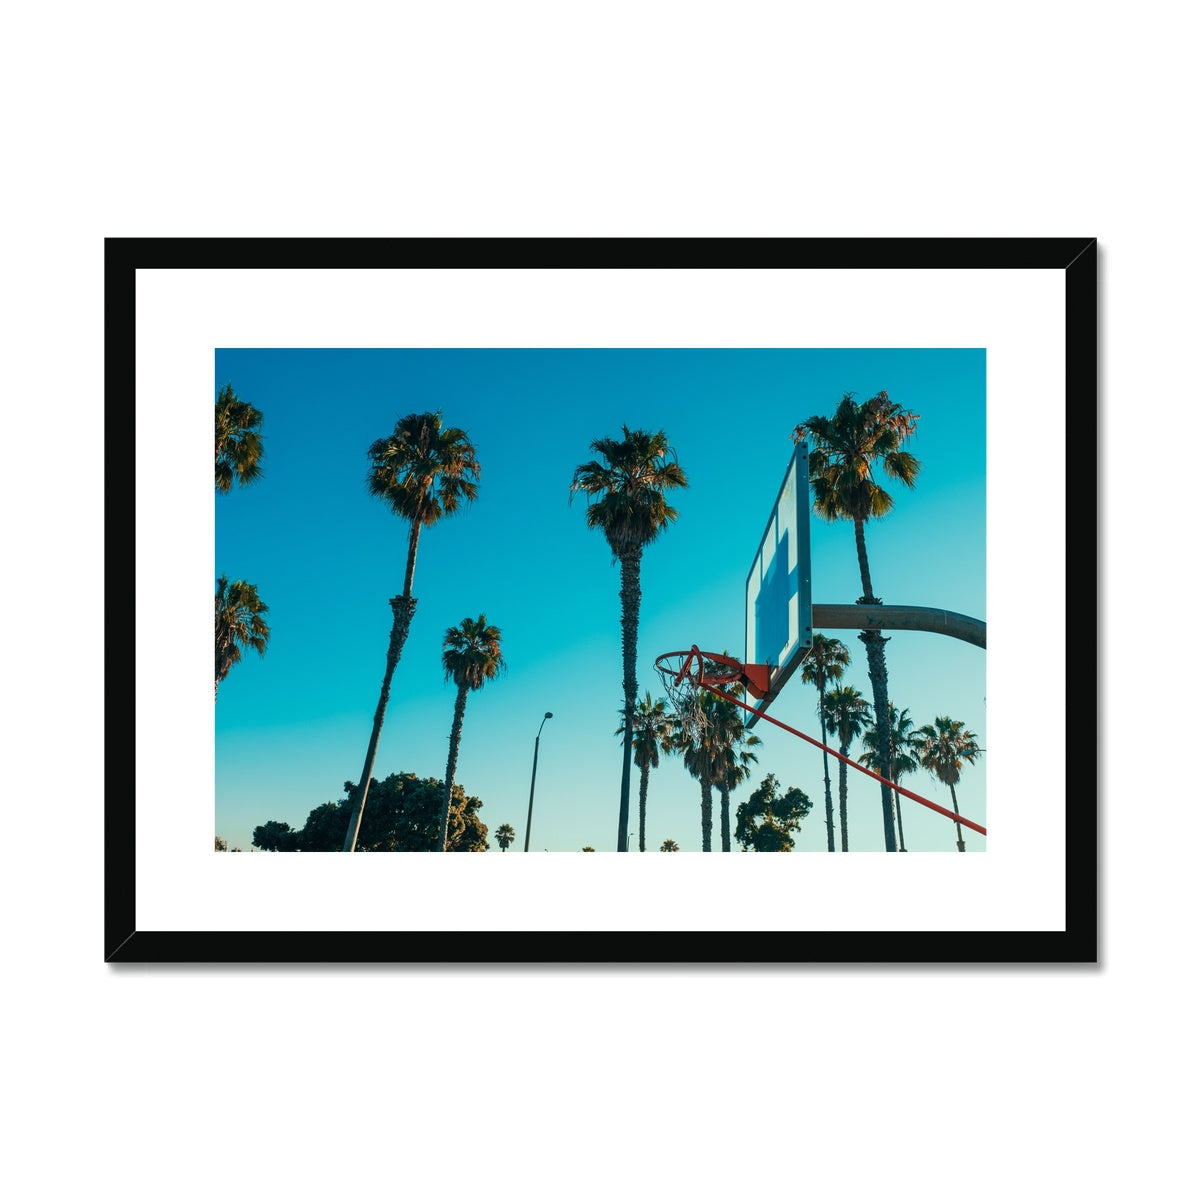 Taking Shots Vol.1 #23 - Santa Monica, CA